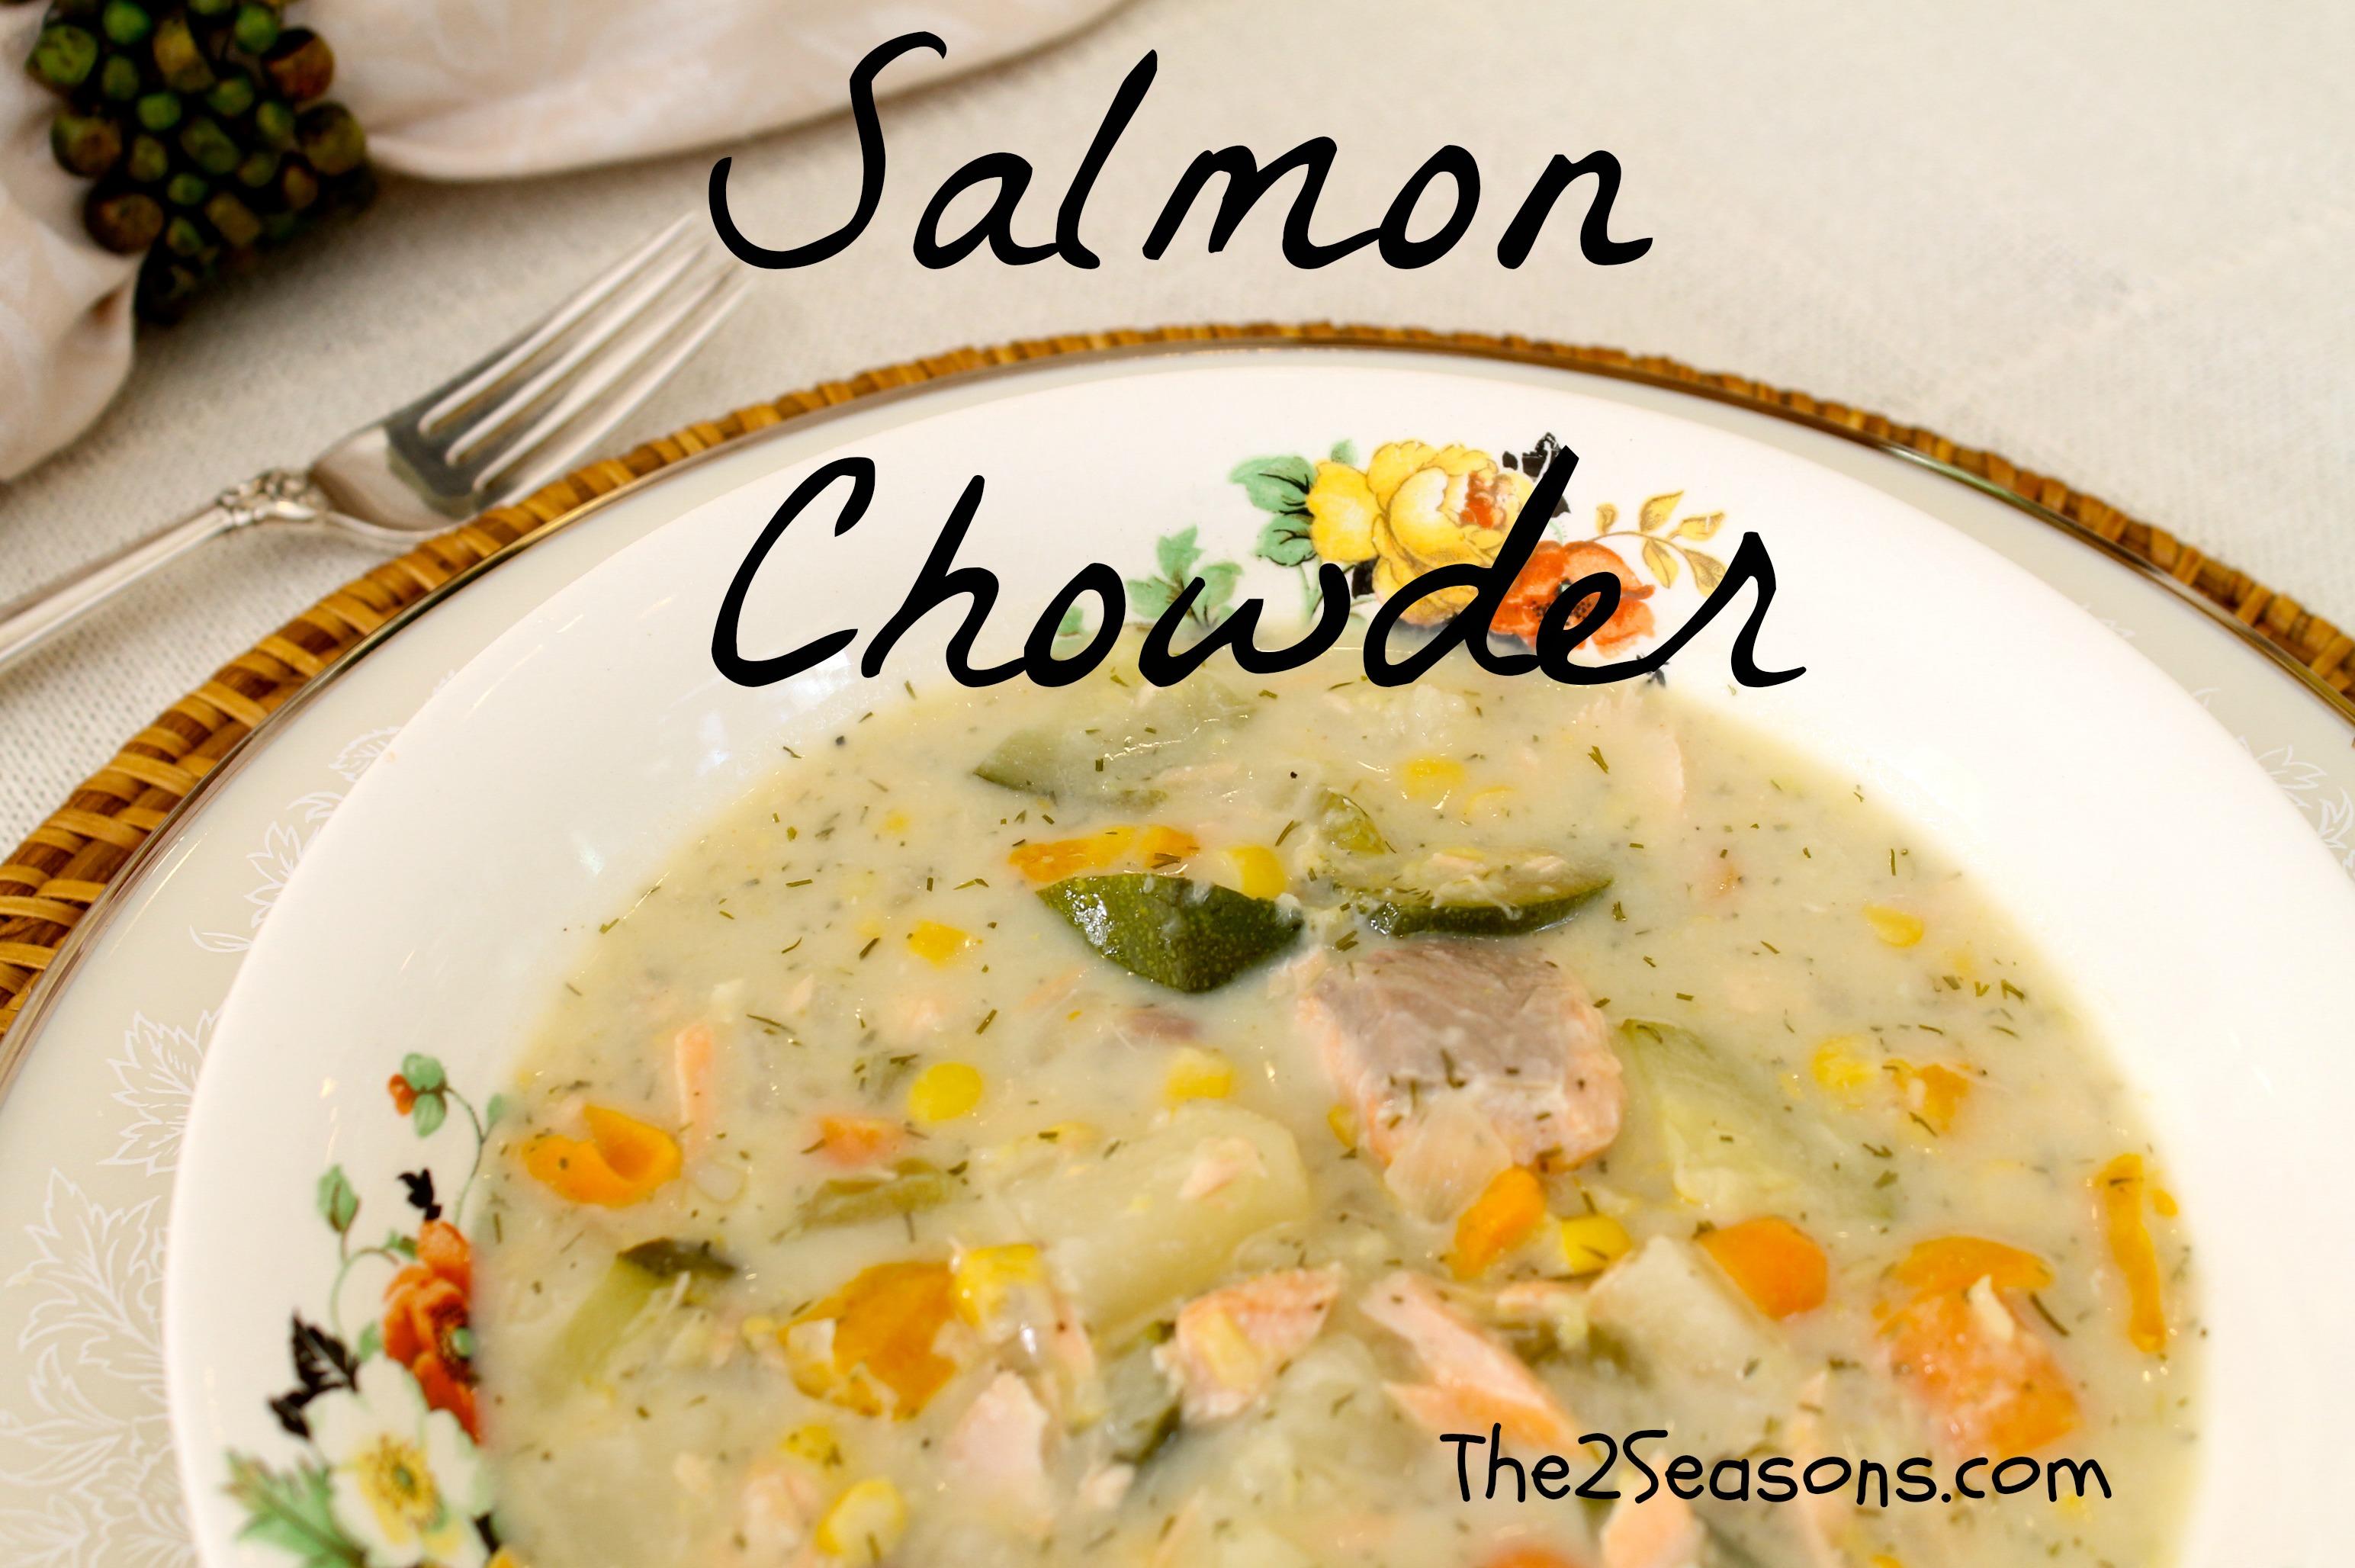 Salmon Chowder - Chicken and Dumplings